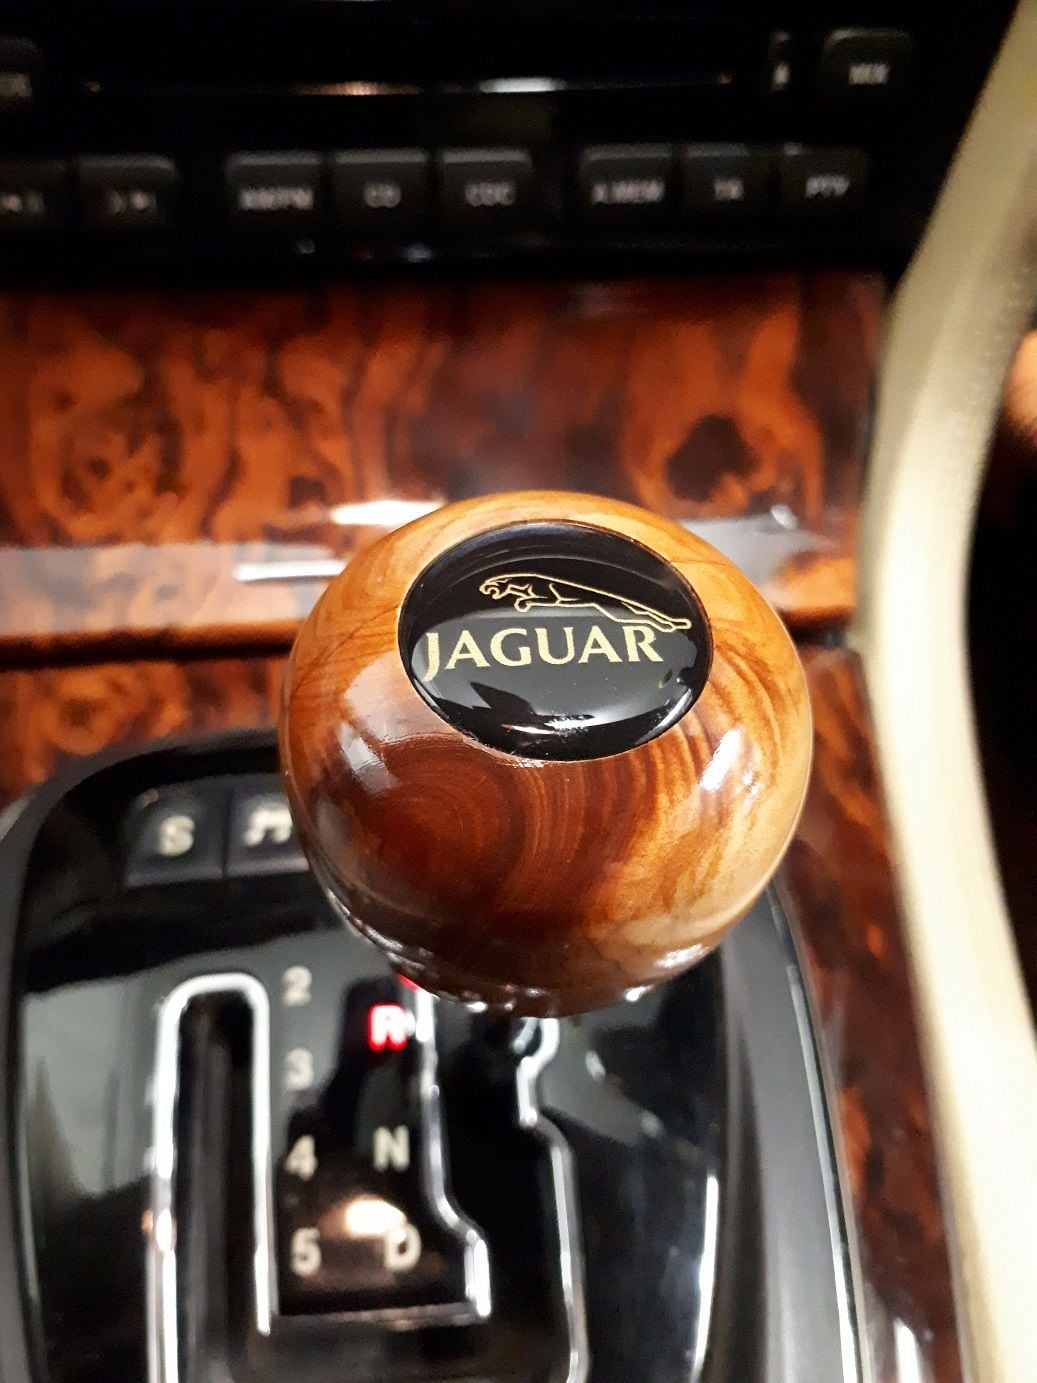 Interior/Upholstery - Gear stick knobs - New - 1990 to 2010 Jaguar XJ - Terrigal, Australia